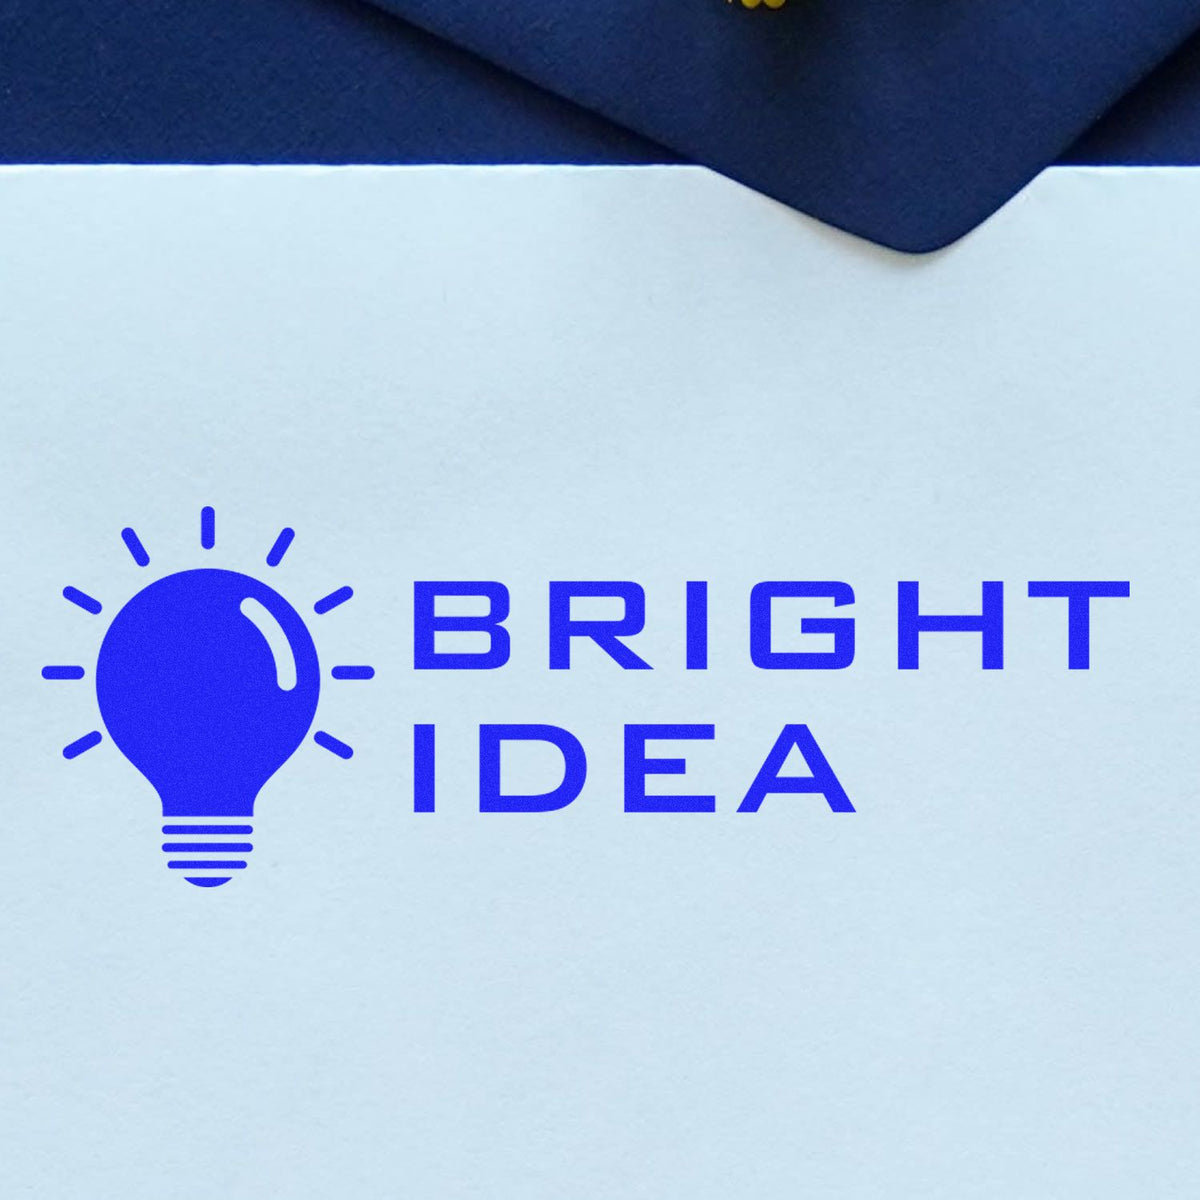 Slim Pre-Inked Bright Idea Stamp In Use Photo